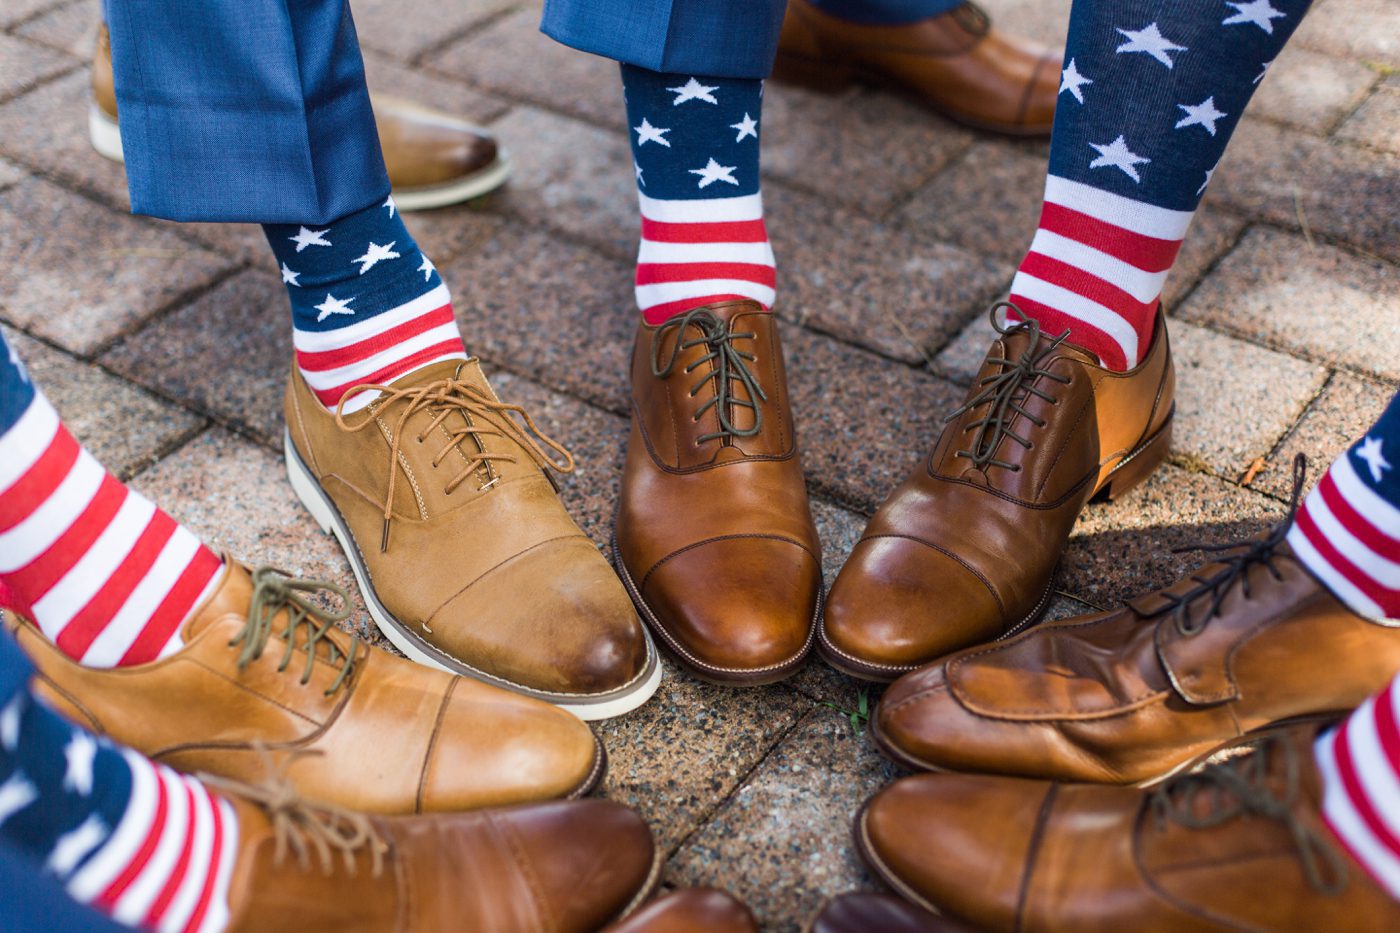 Fun American flag socks for the groomsmen